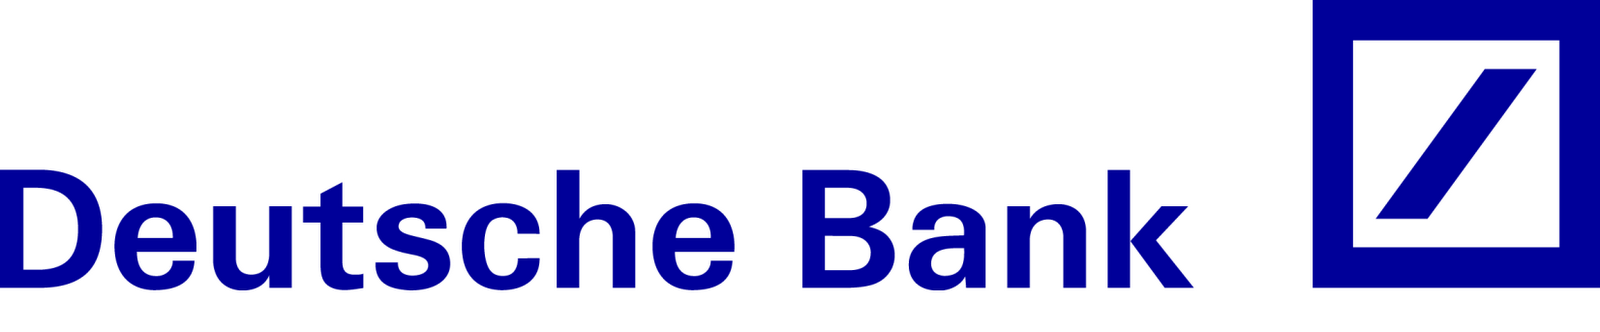 History Of All Logos All Deutsche Bank Logo